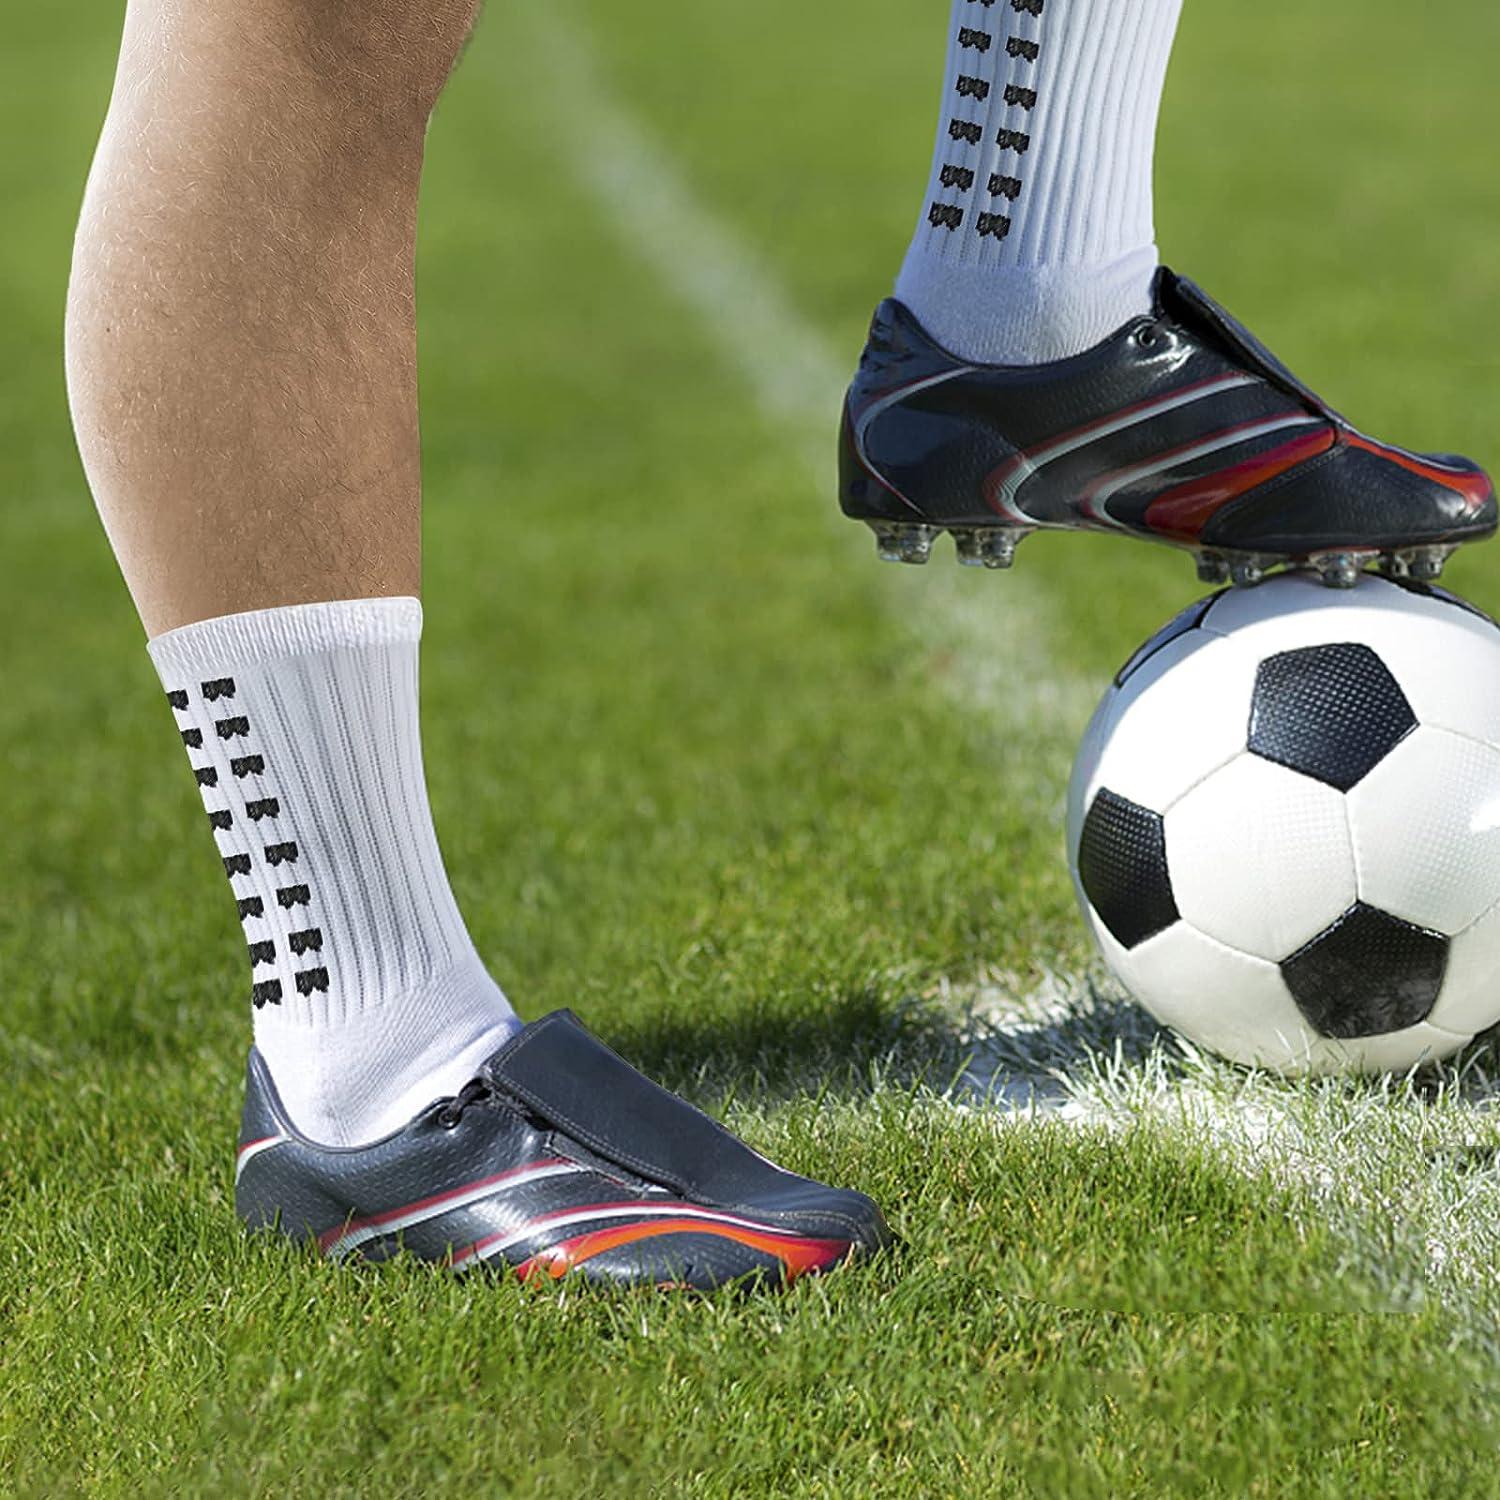  Ultrafun 5 Pairs Mens Soccer Socks Grip Socks